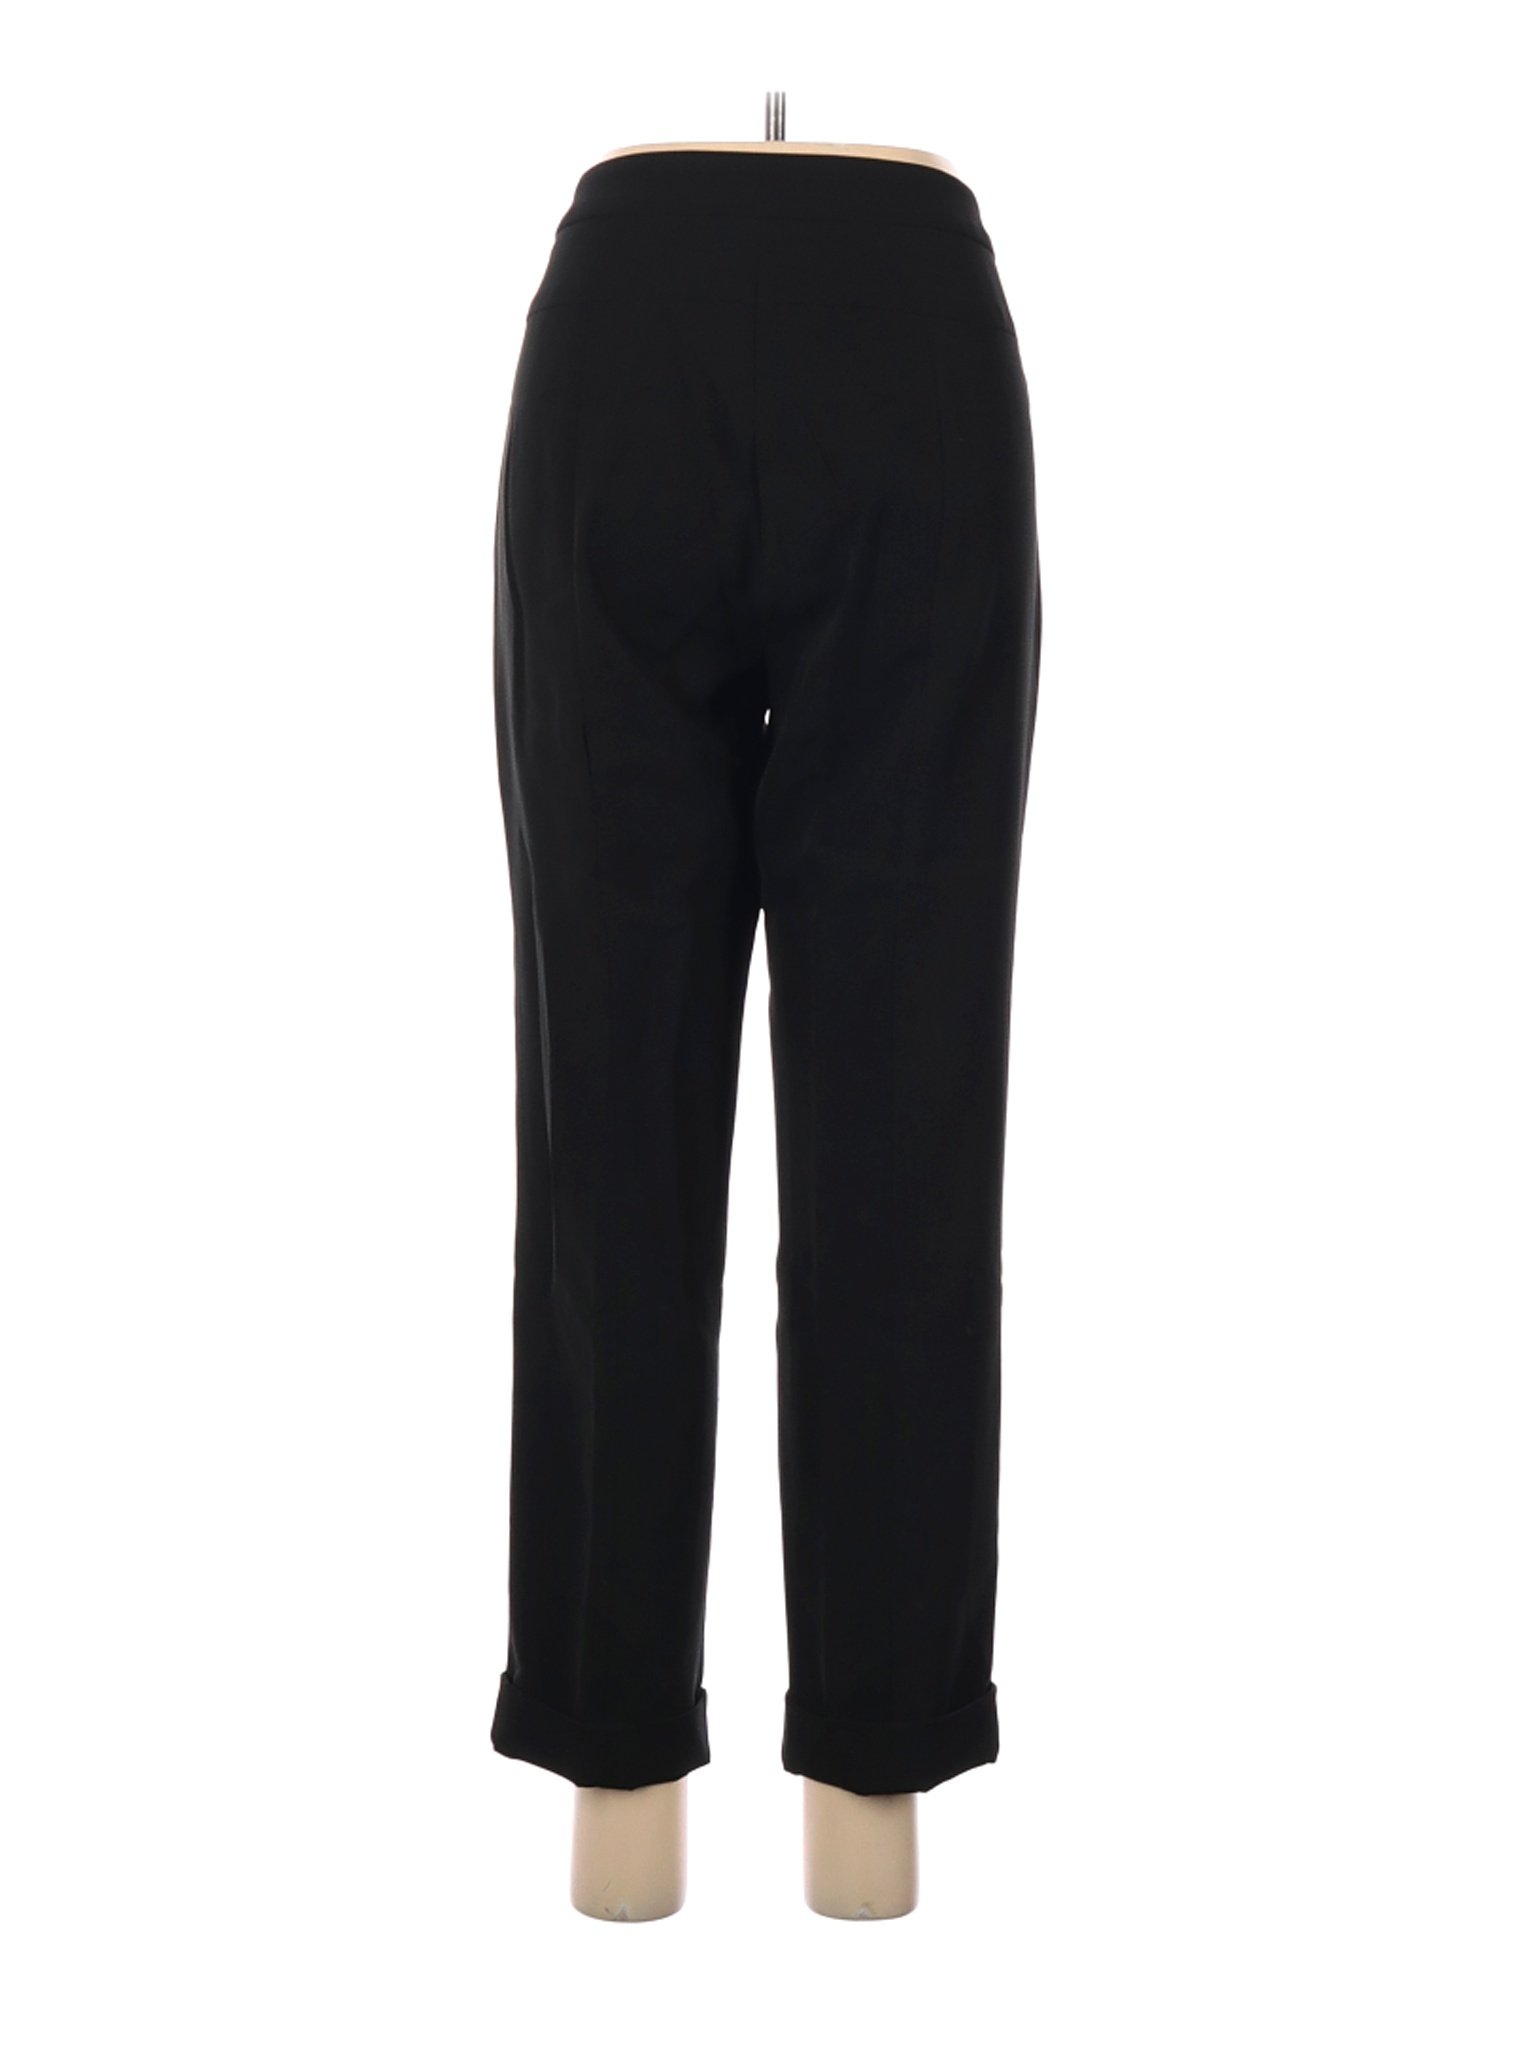 Adrianna Papell Women Black Dress Pants 8 | eBay